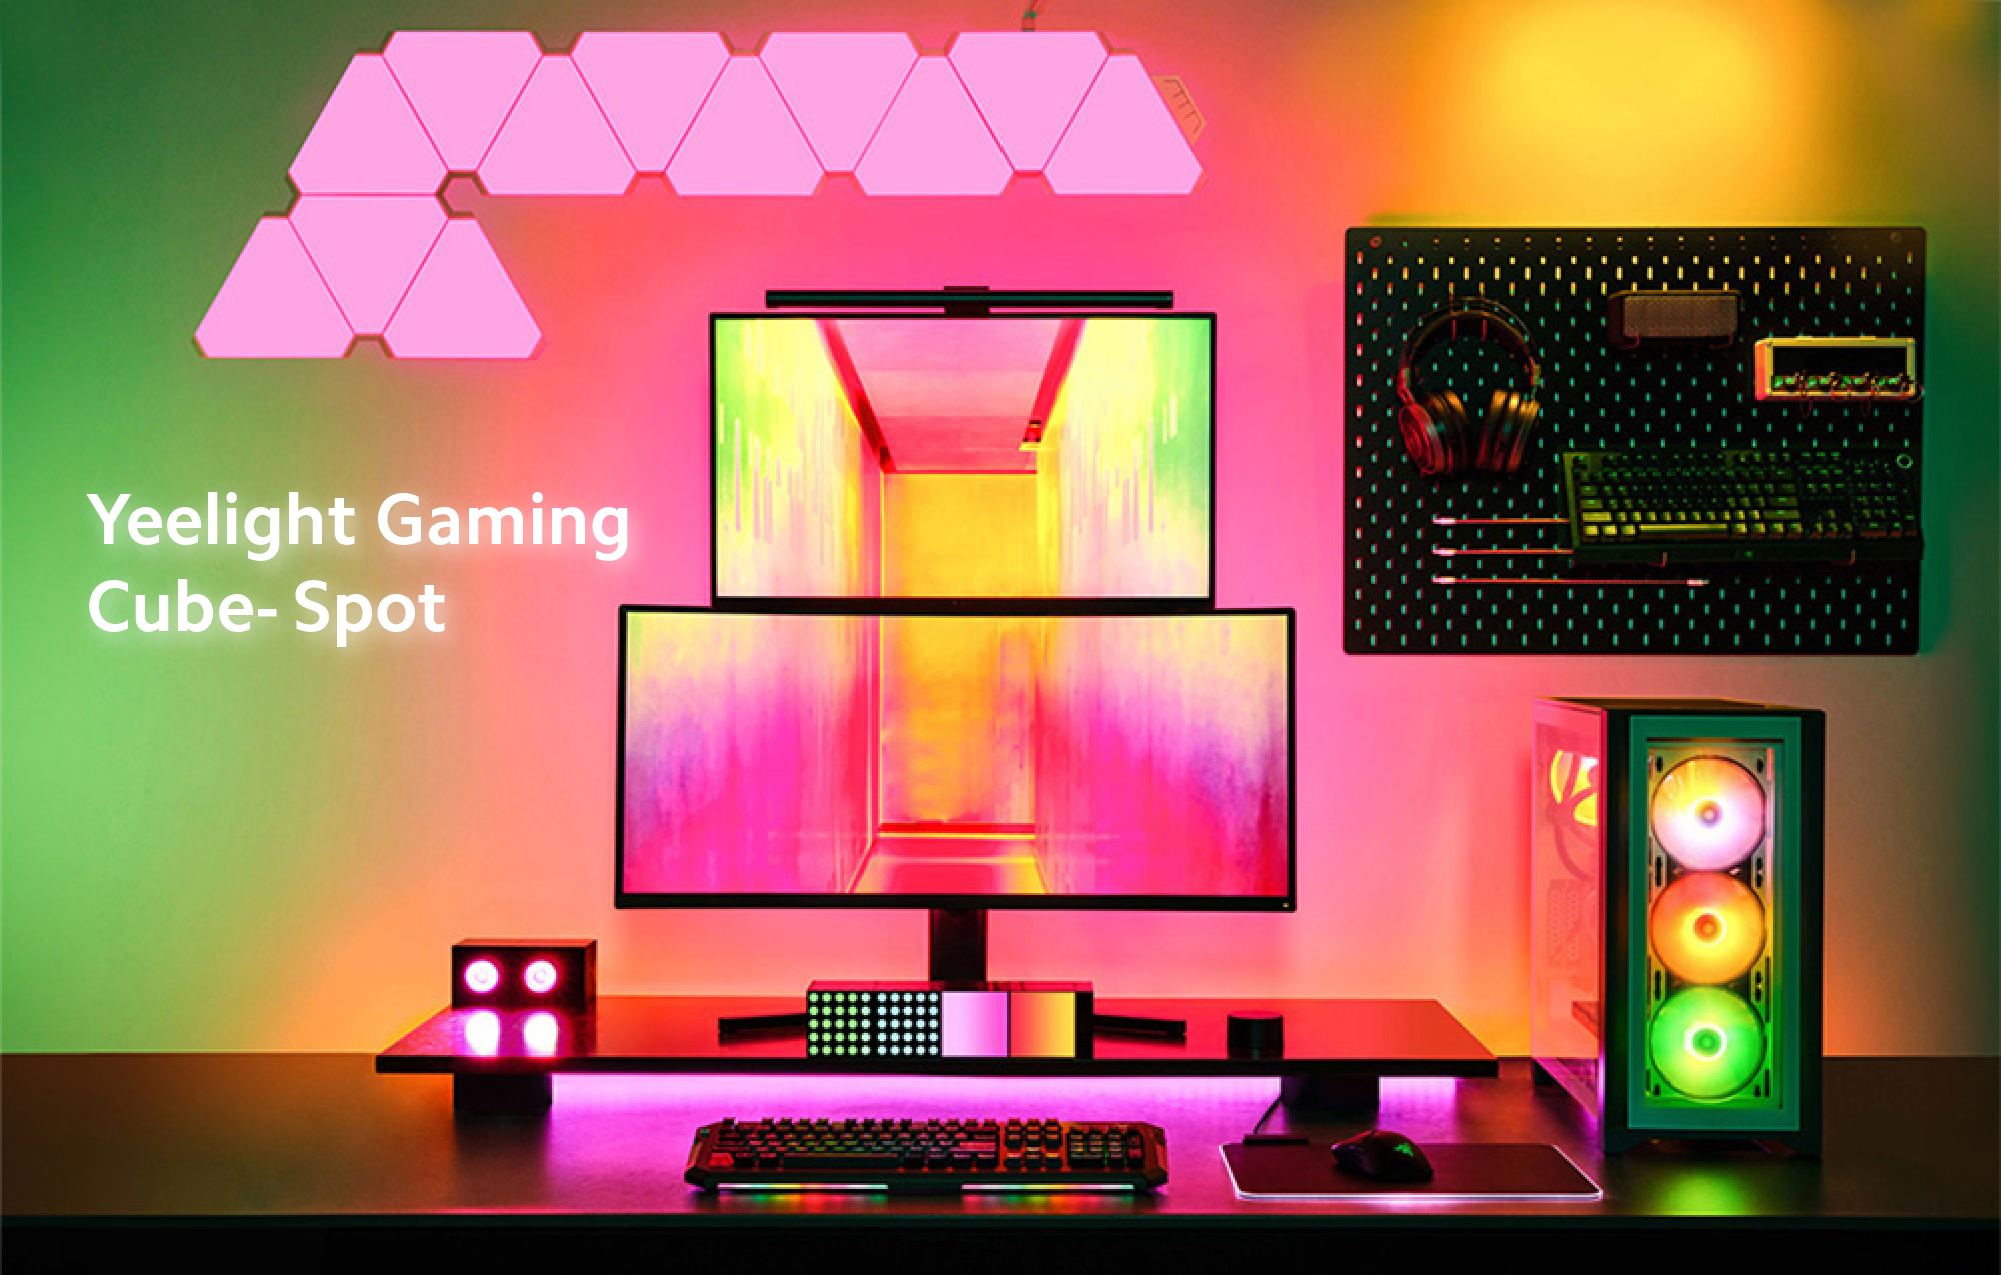 Yeelight Gaming Cube- Spot